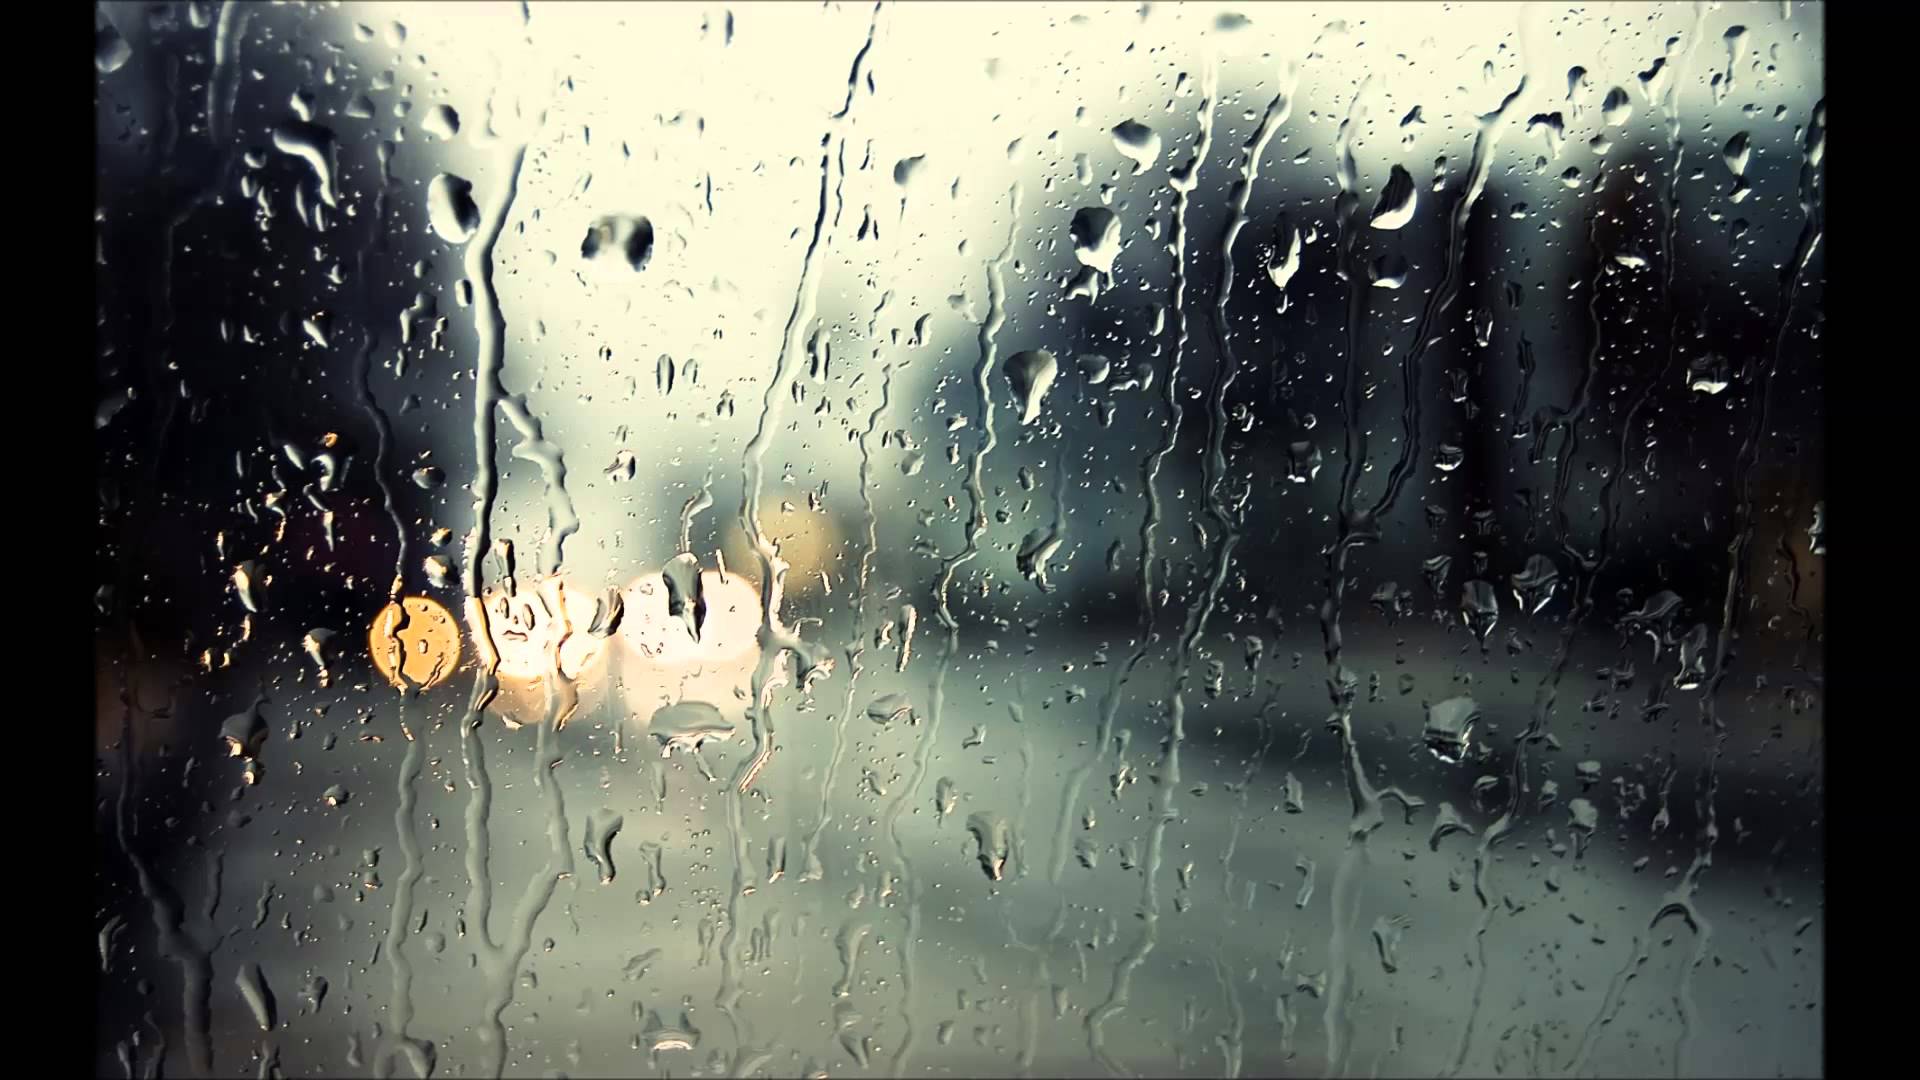 Yiruma - Kiss the rain - Classical guitar with rainy mood - YouTube